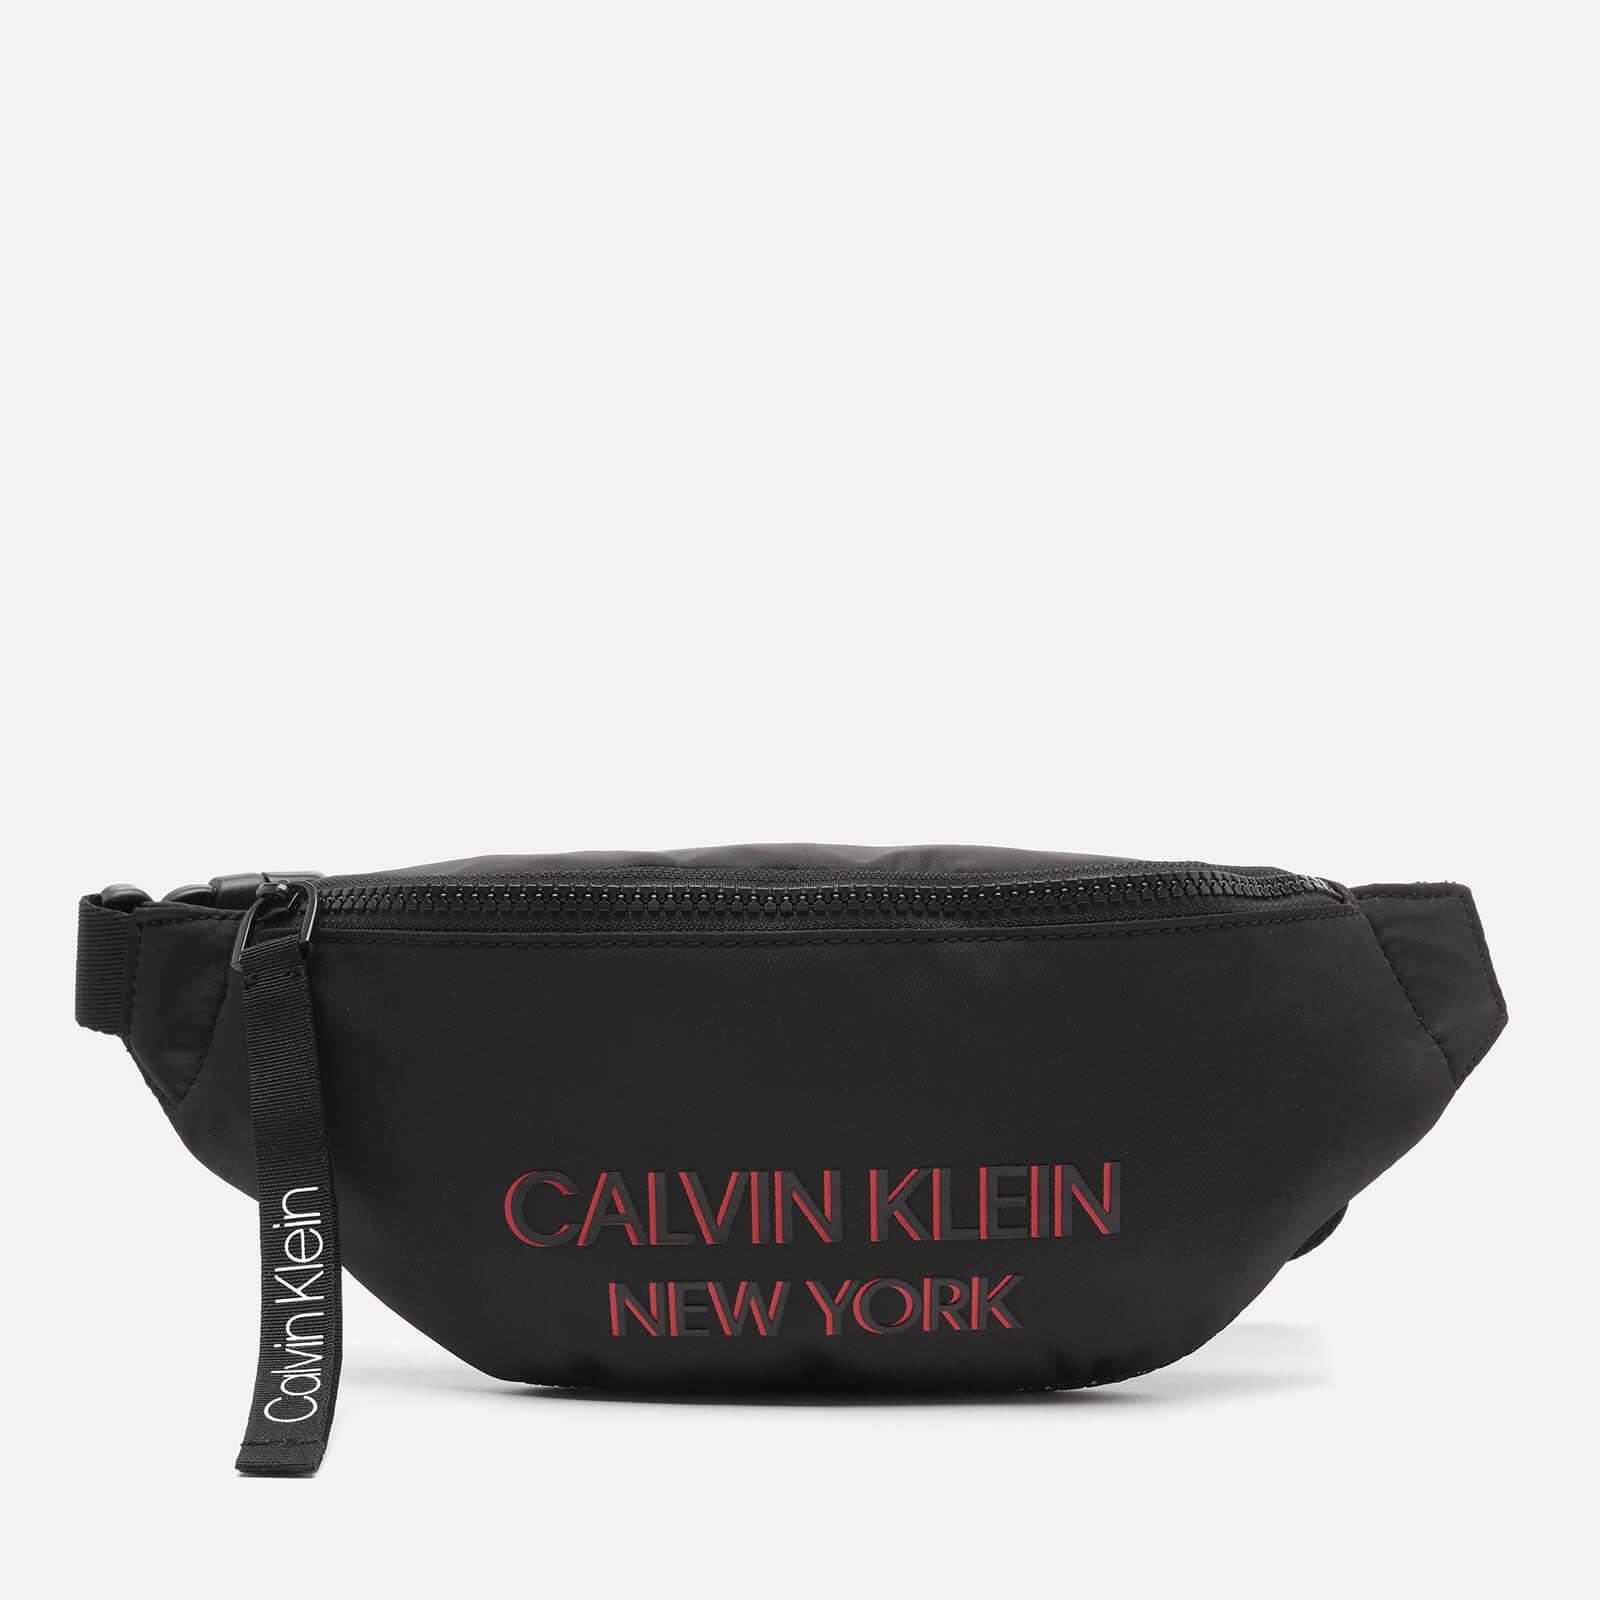 Ironisch Geleidbaarheid Buskruit Calvin Klein Synthetic Ny Waistbag in Black for Men - Lyst